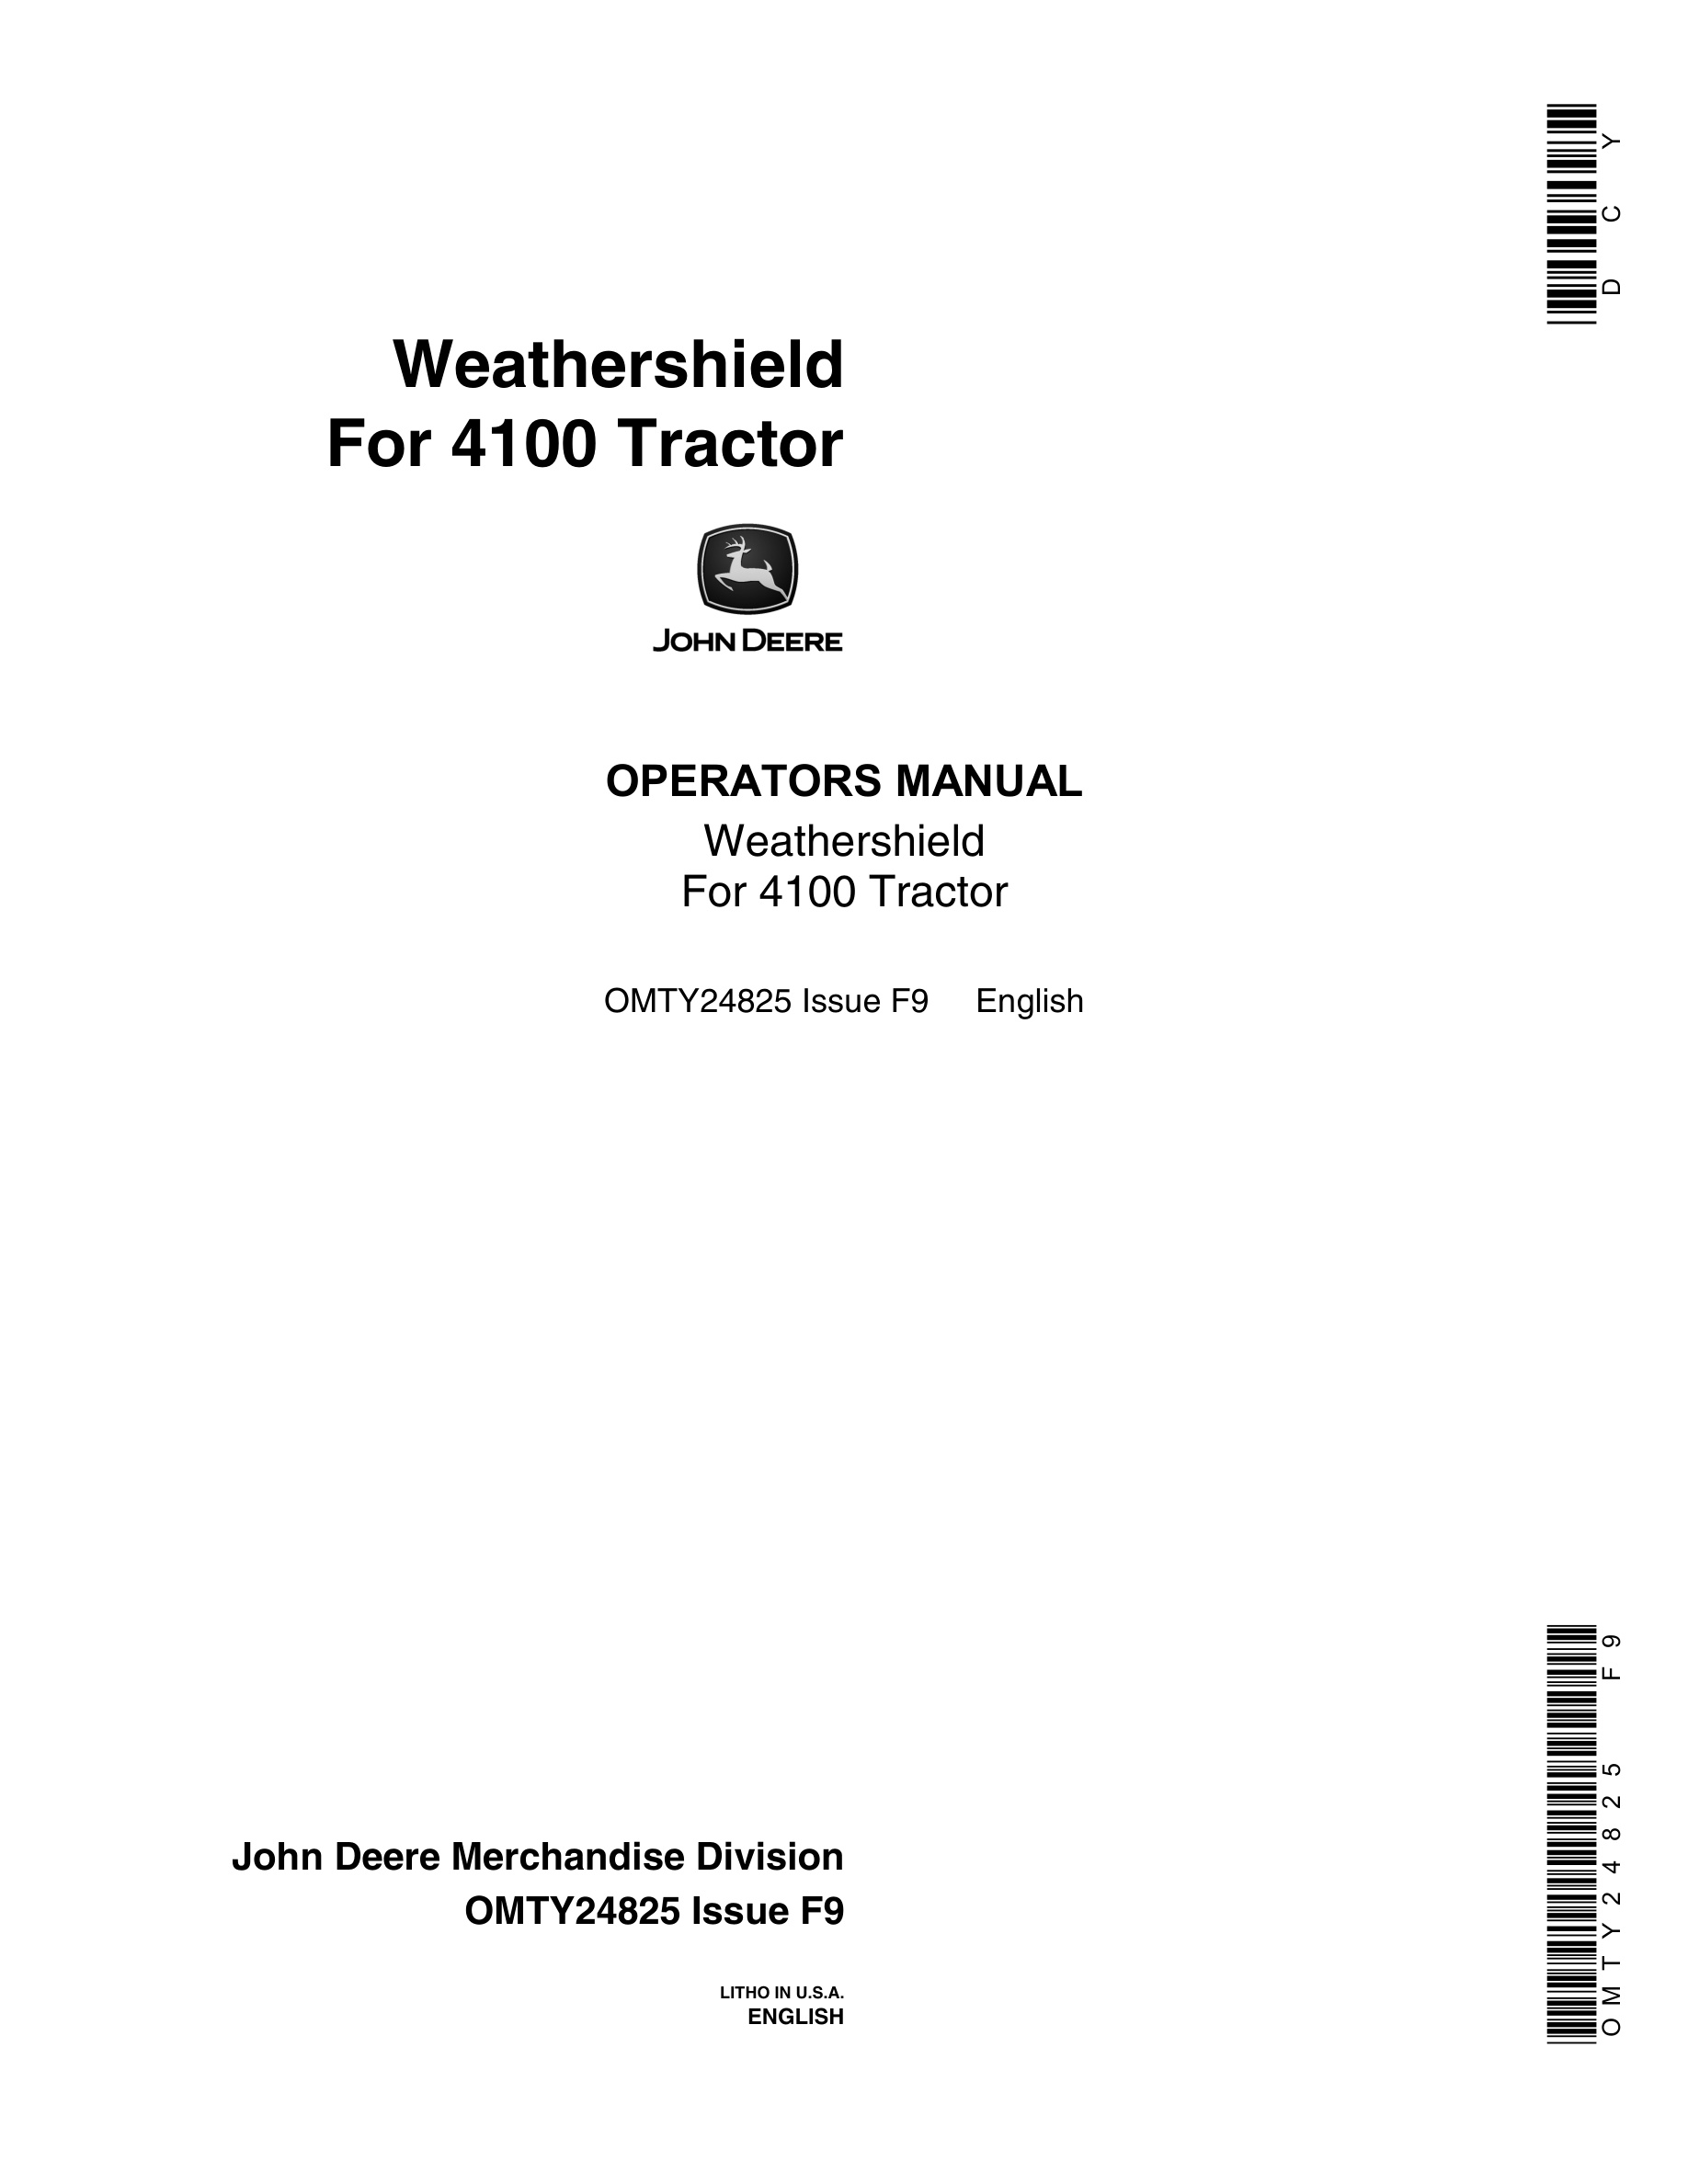 John Deere Weathershield For 4100 Tractors Operator Manual OMTY24825-1